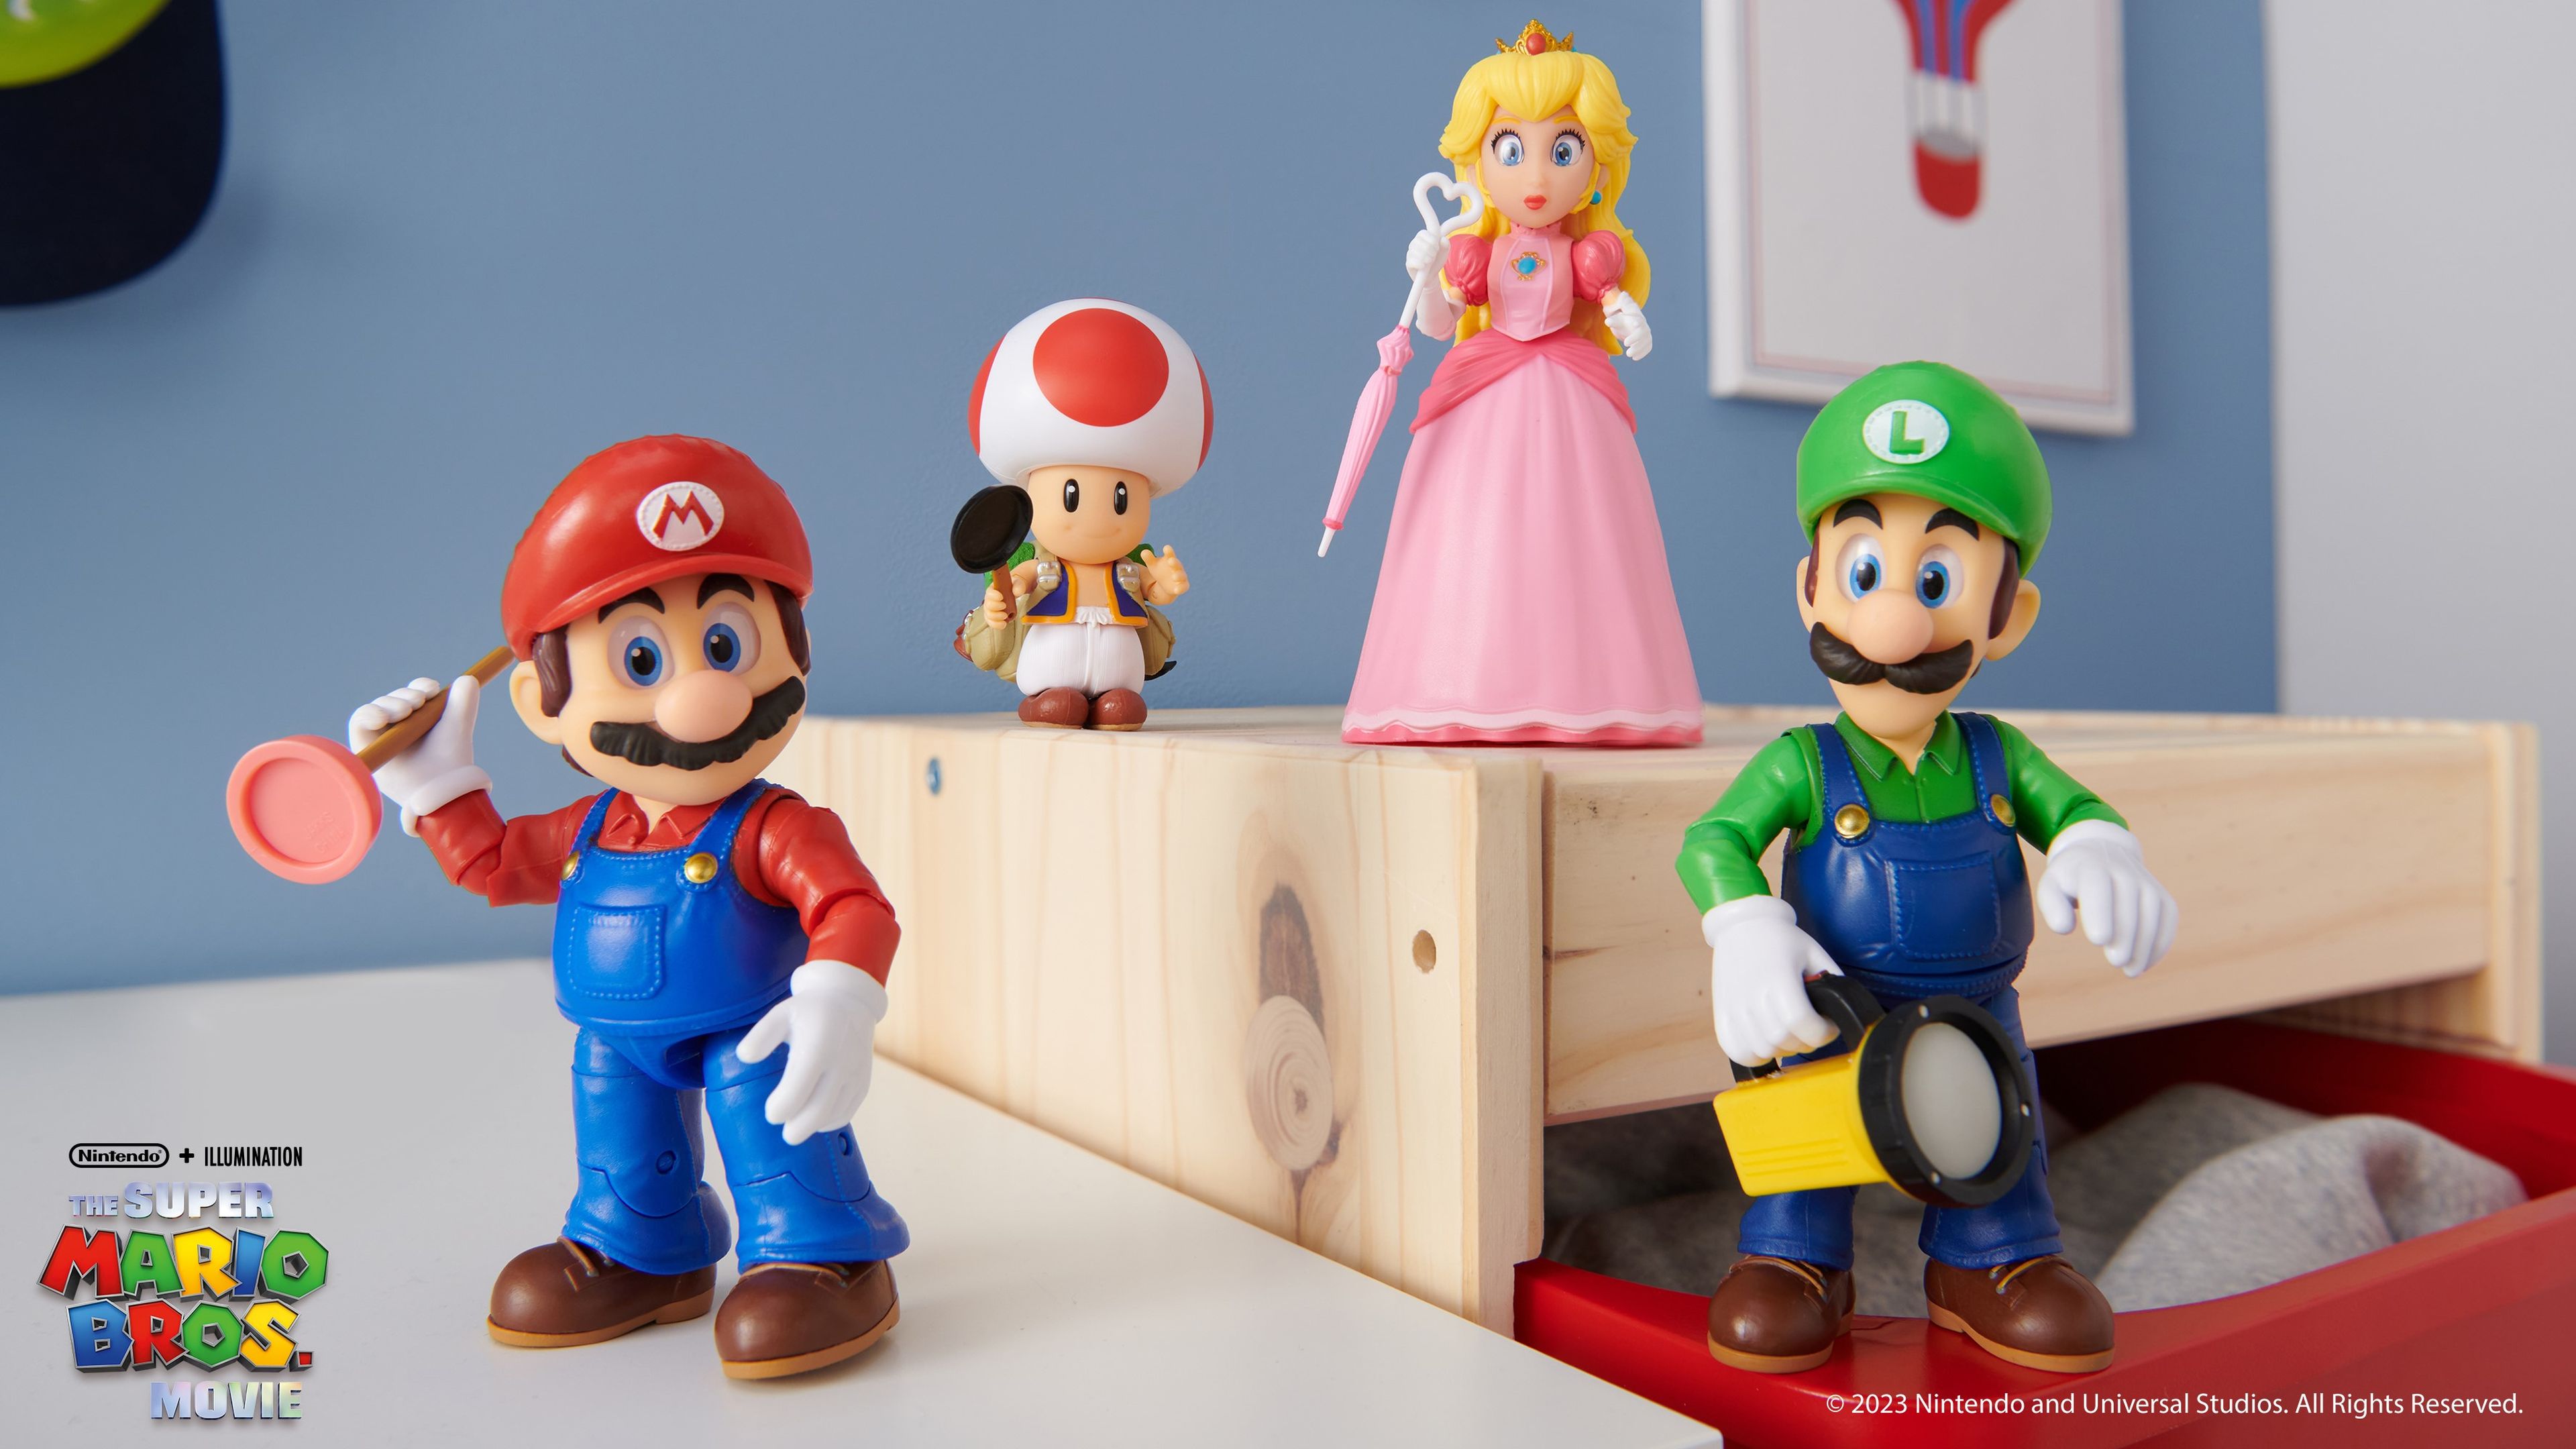 Primer unboxing de los juguetes de Super Mario Bros. La Película